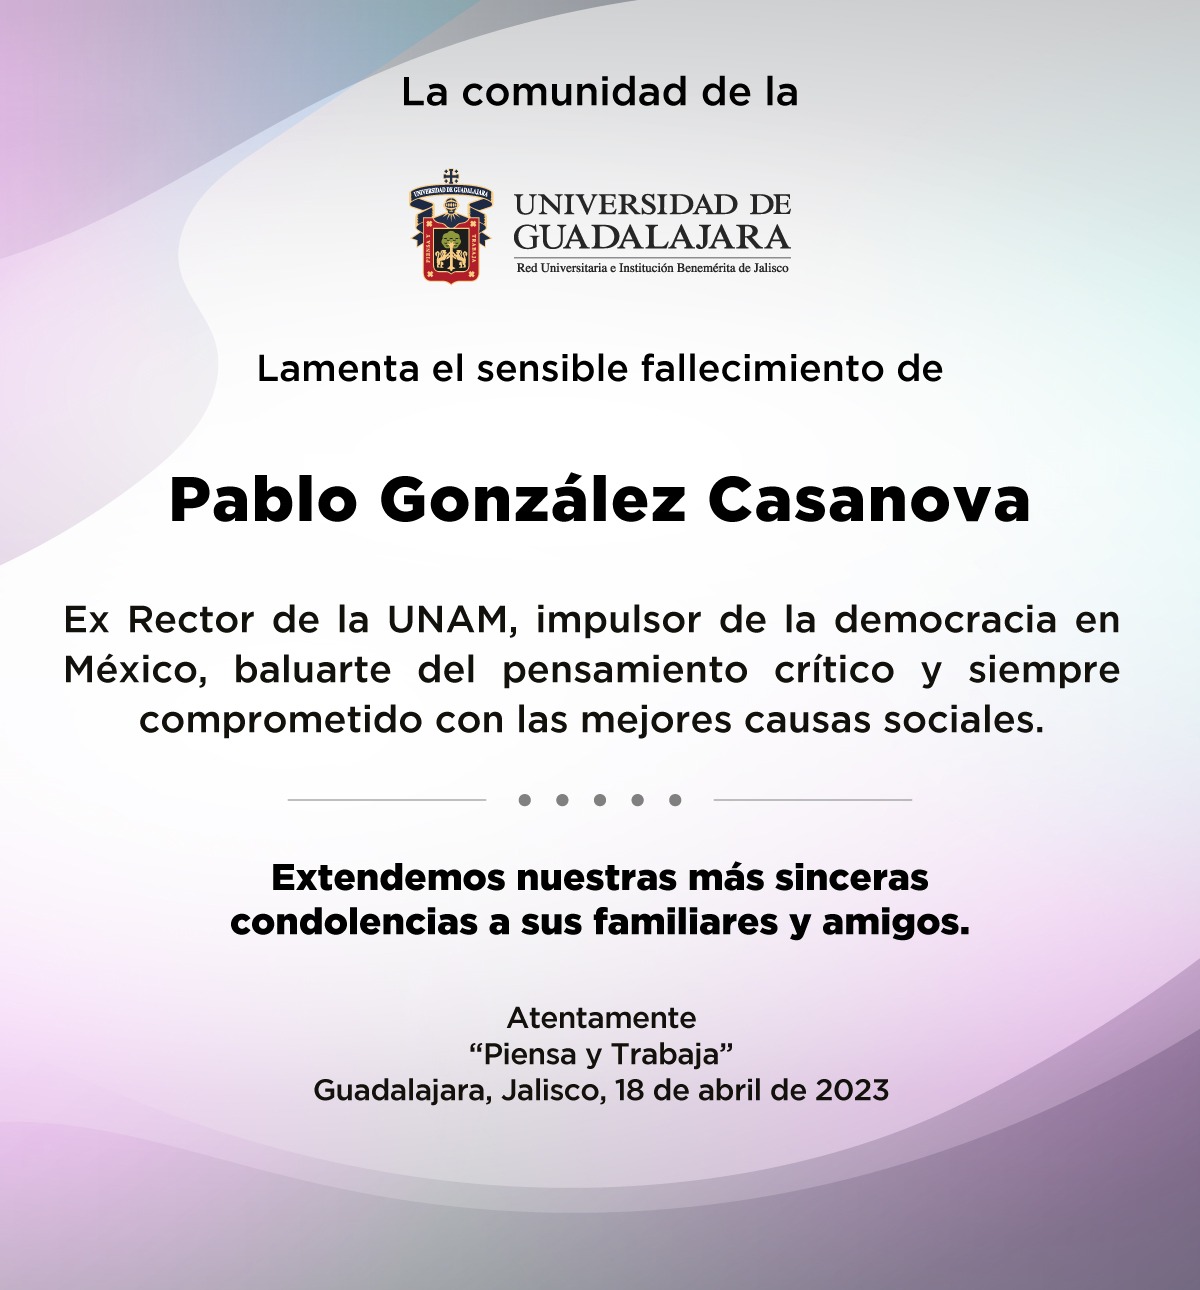 Universidad de Guadalajara (@udg_oficial) / Twitter